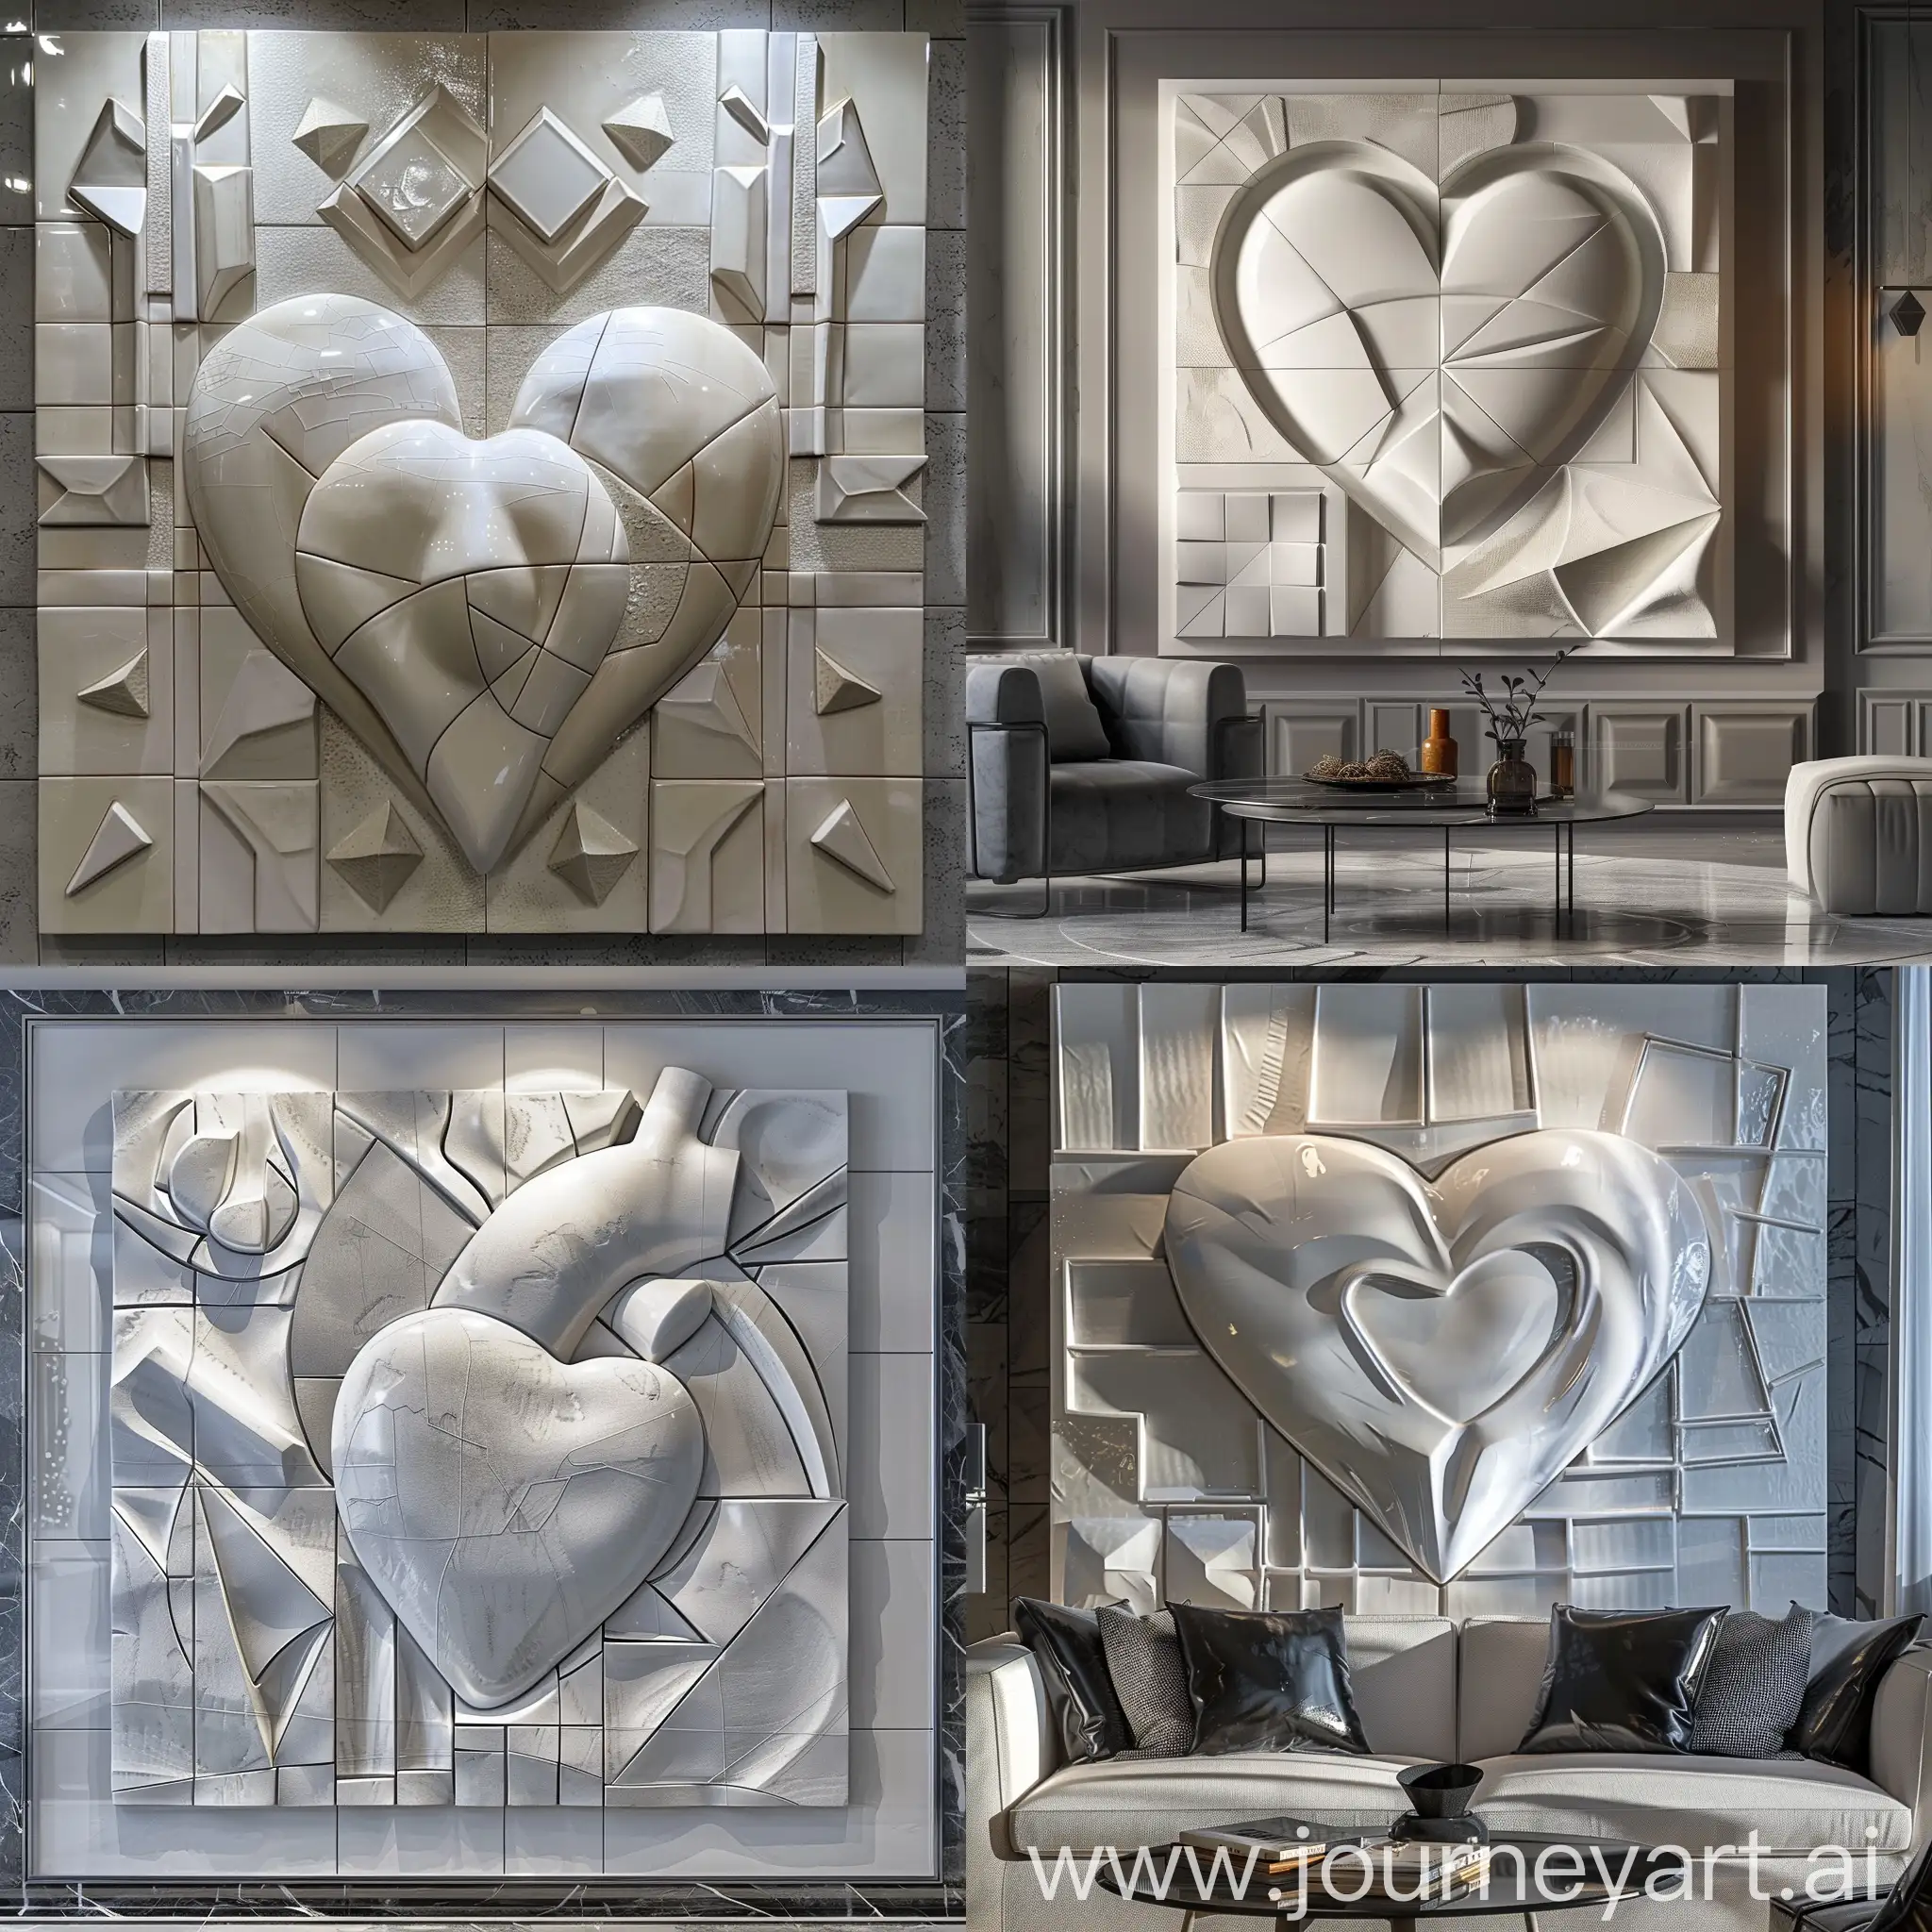 Constructivist-Ceramic-Heart-Wall-Art-with-Geometric-Details